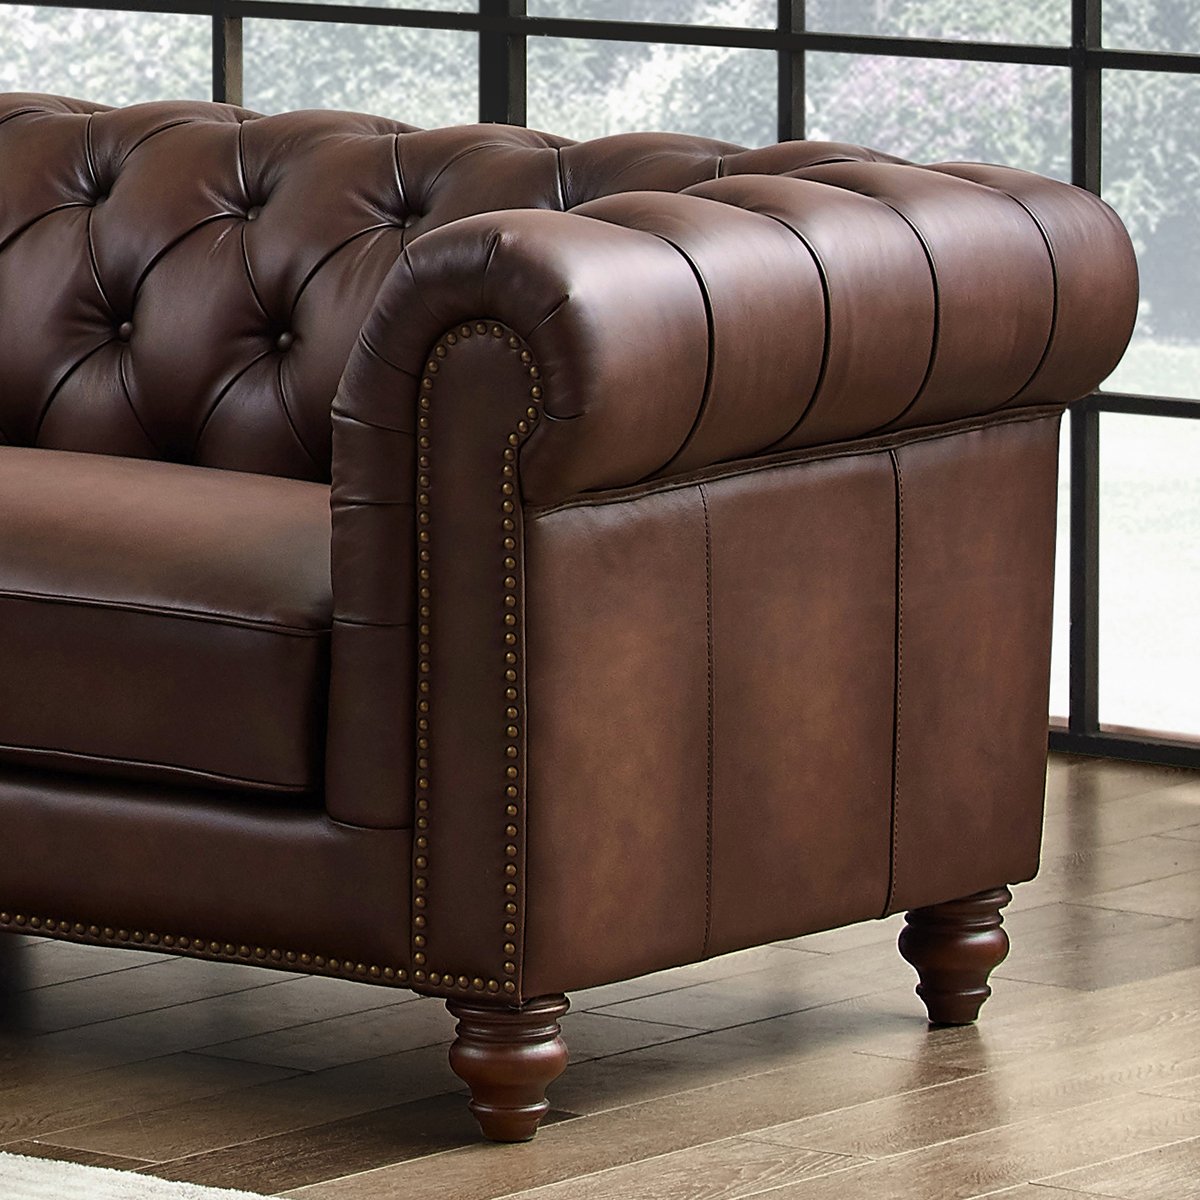 Allington Brown Leather Chesterfield Corner Sofa